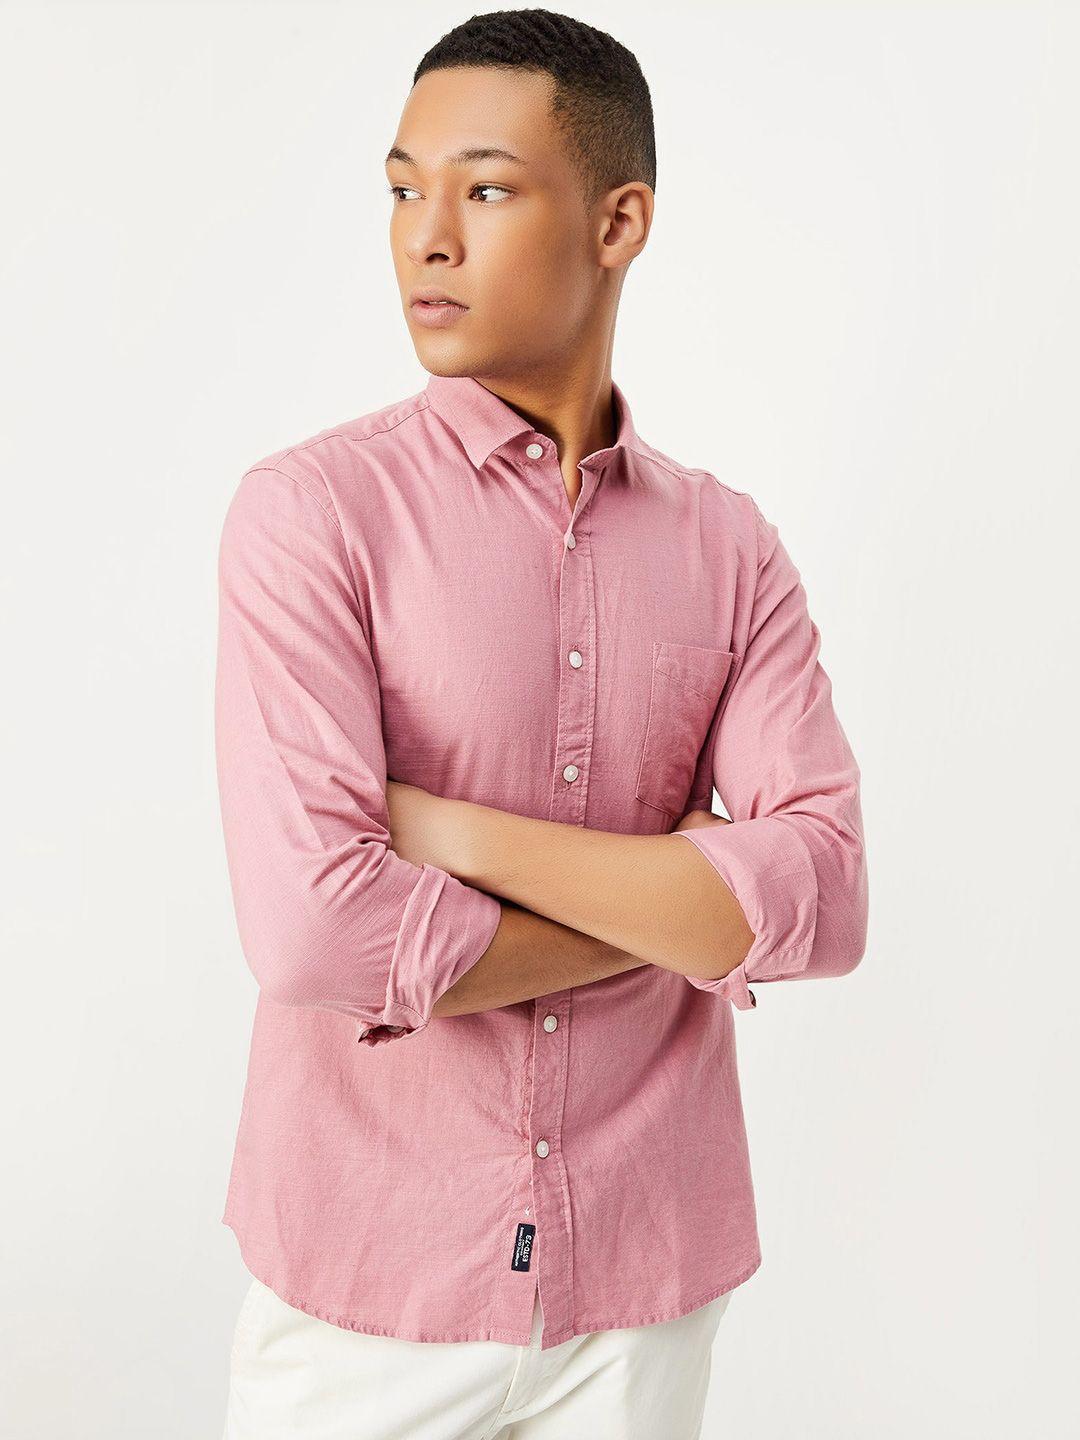 max cutaway collar cotton casual shirt